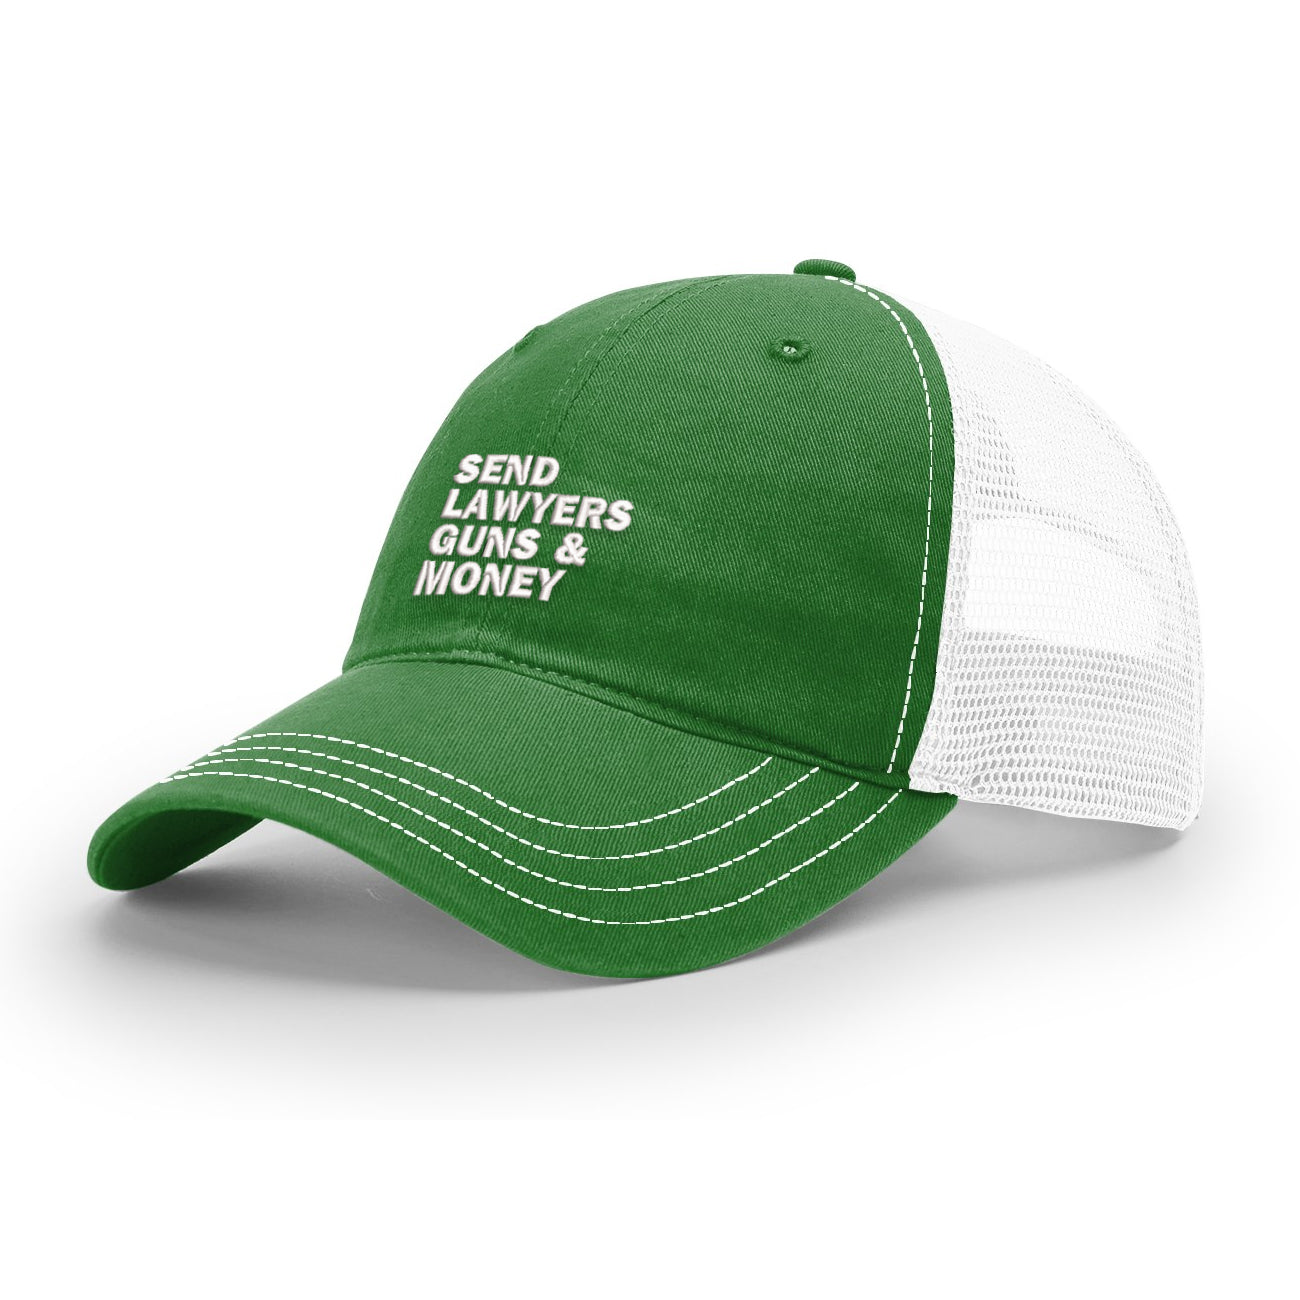 Send Lawyers Guns & Money - Choose Your Style Hat Kelly Soft Trucker